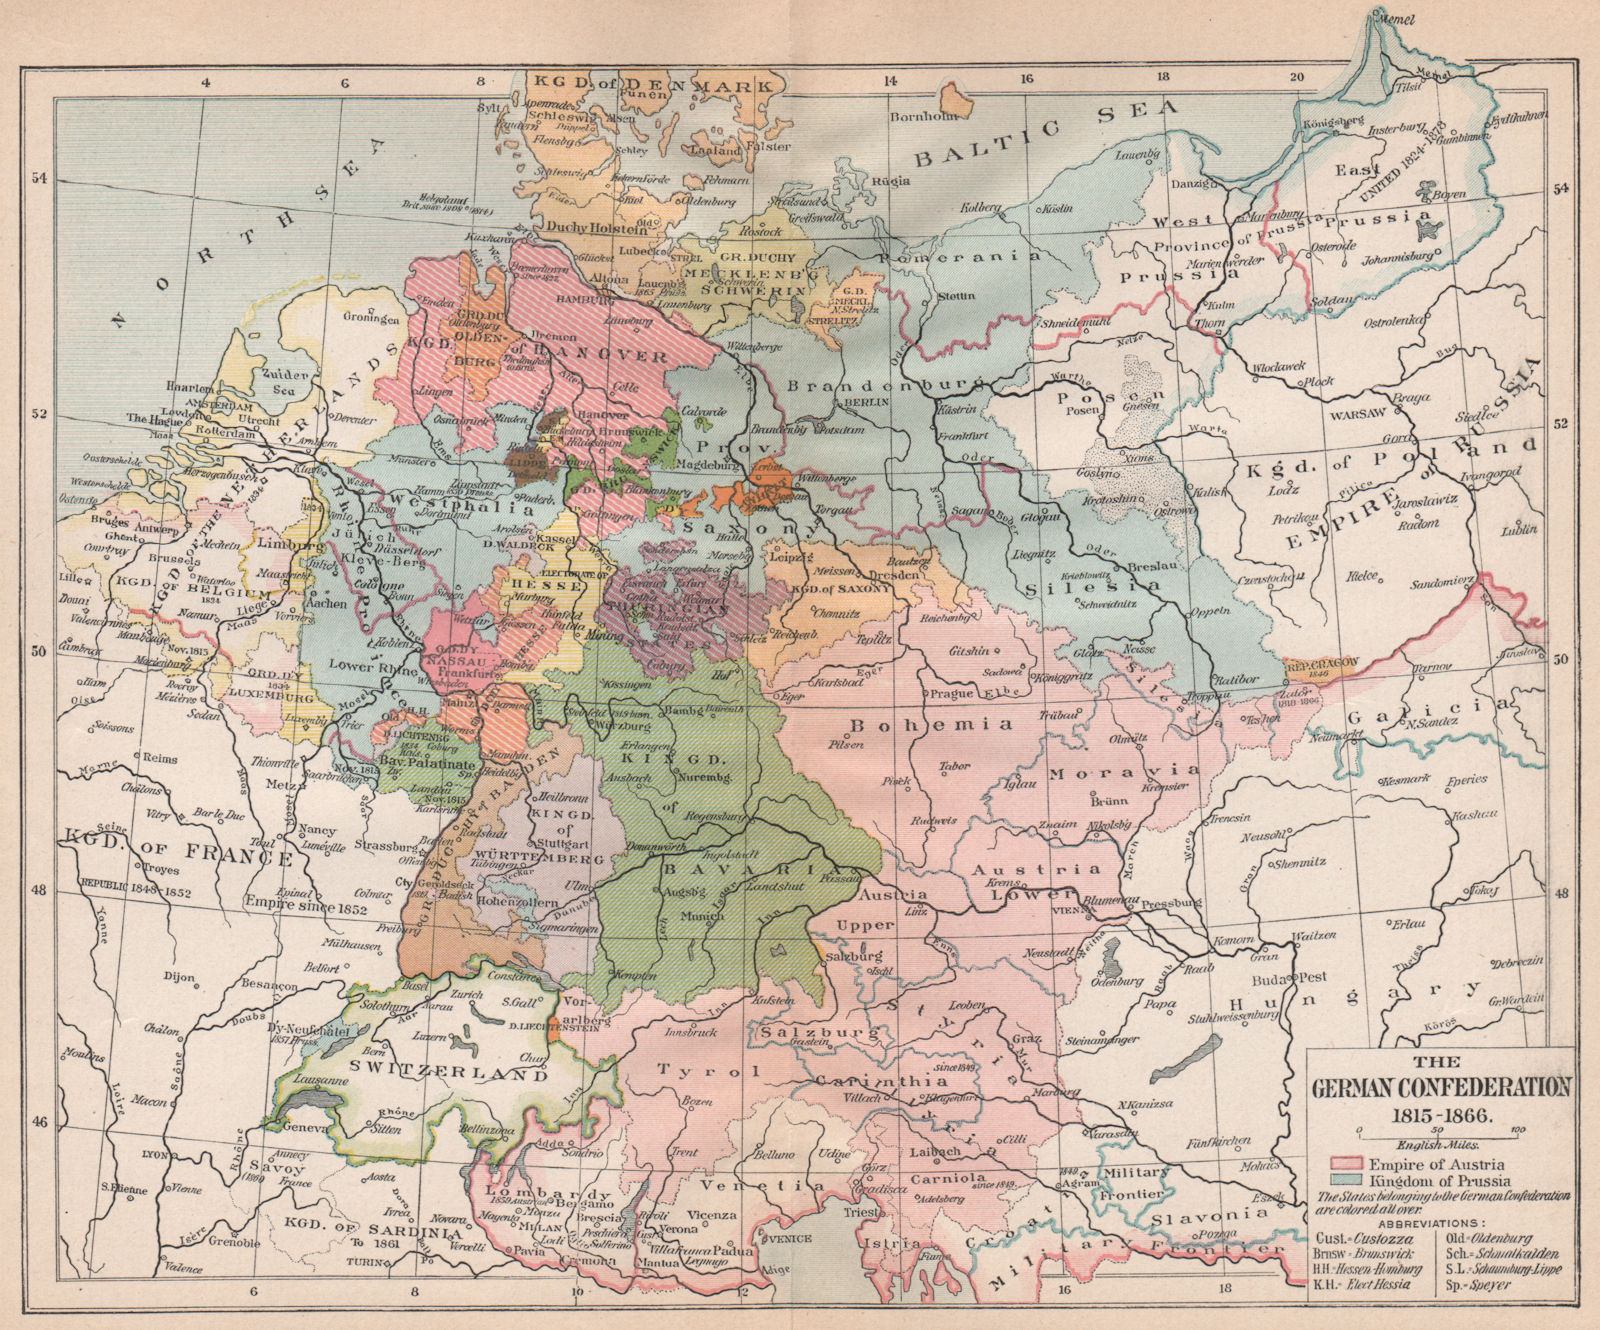 GERMAN CONFEDERATION 1815-1866. Empire of Austria. Kingdom of Prussia 1917 map